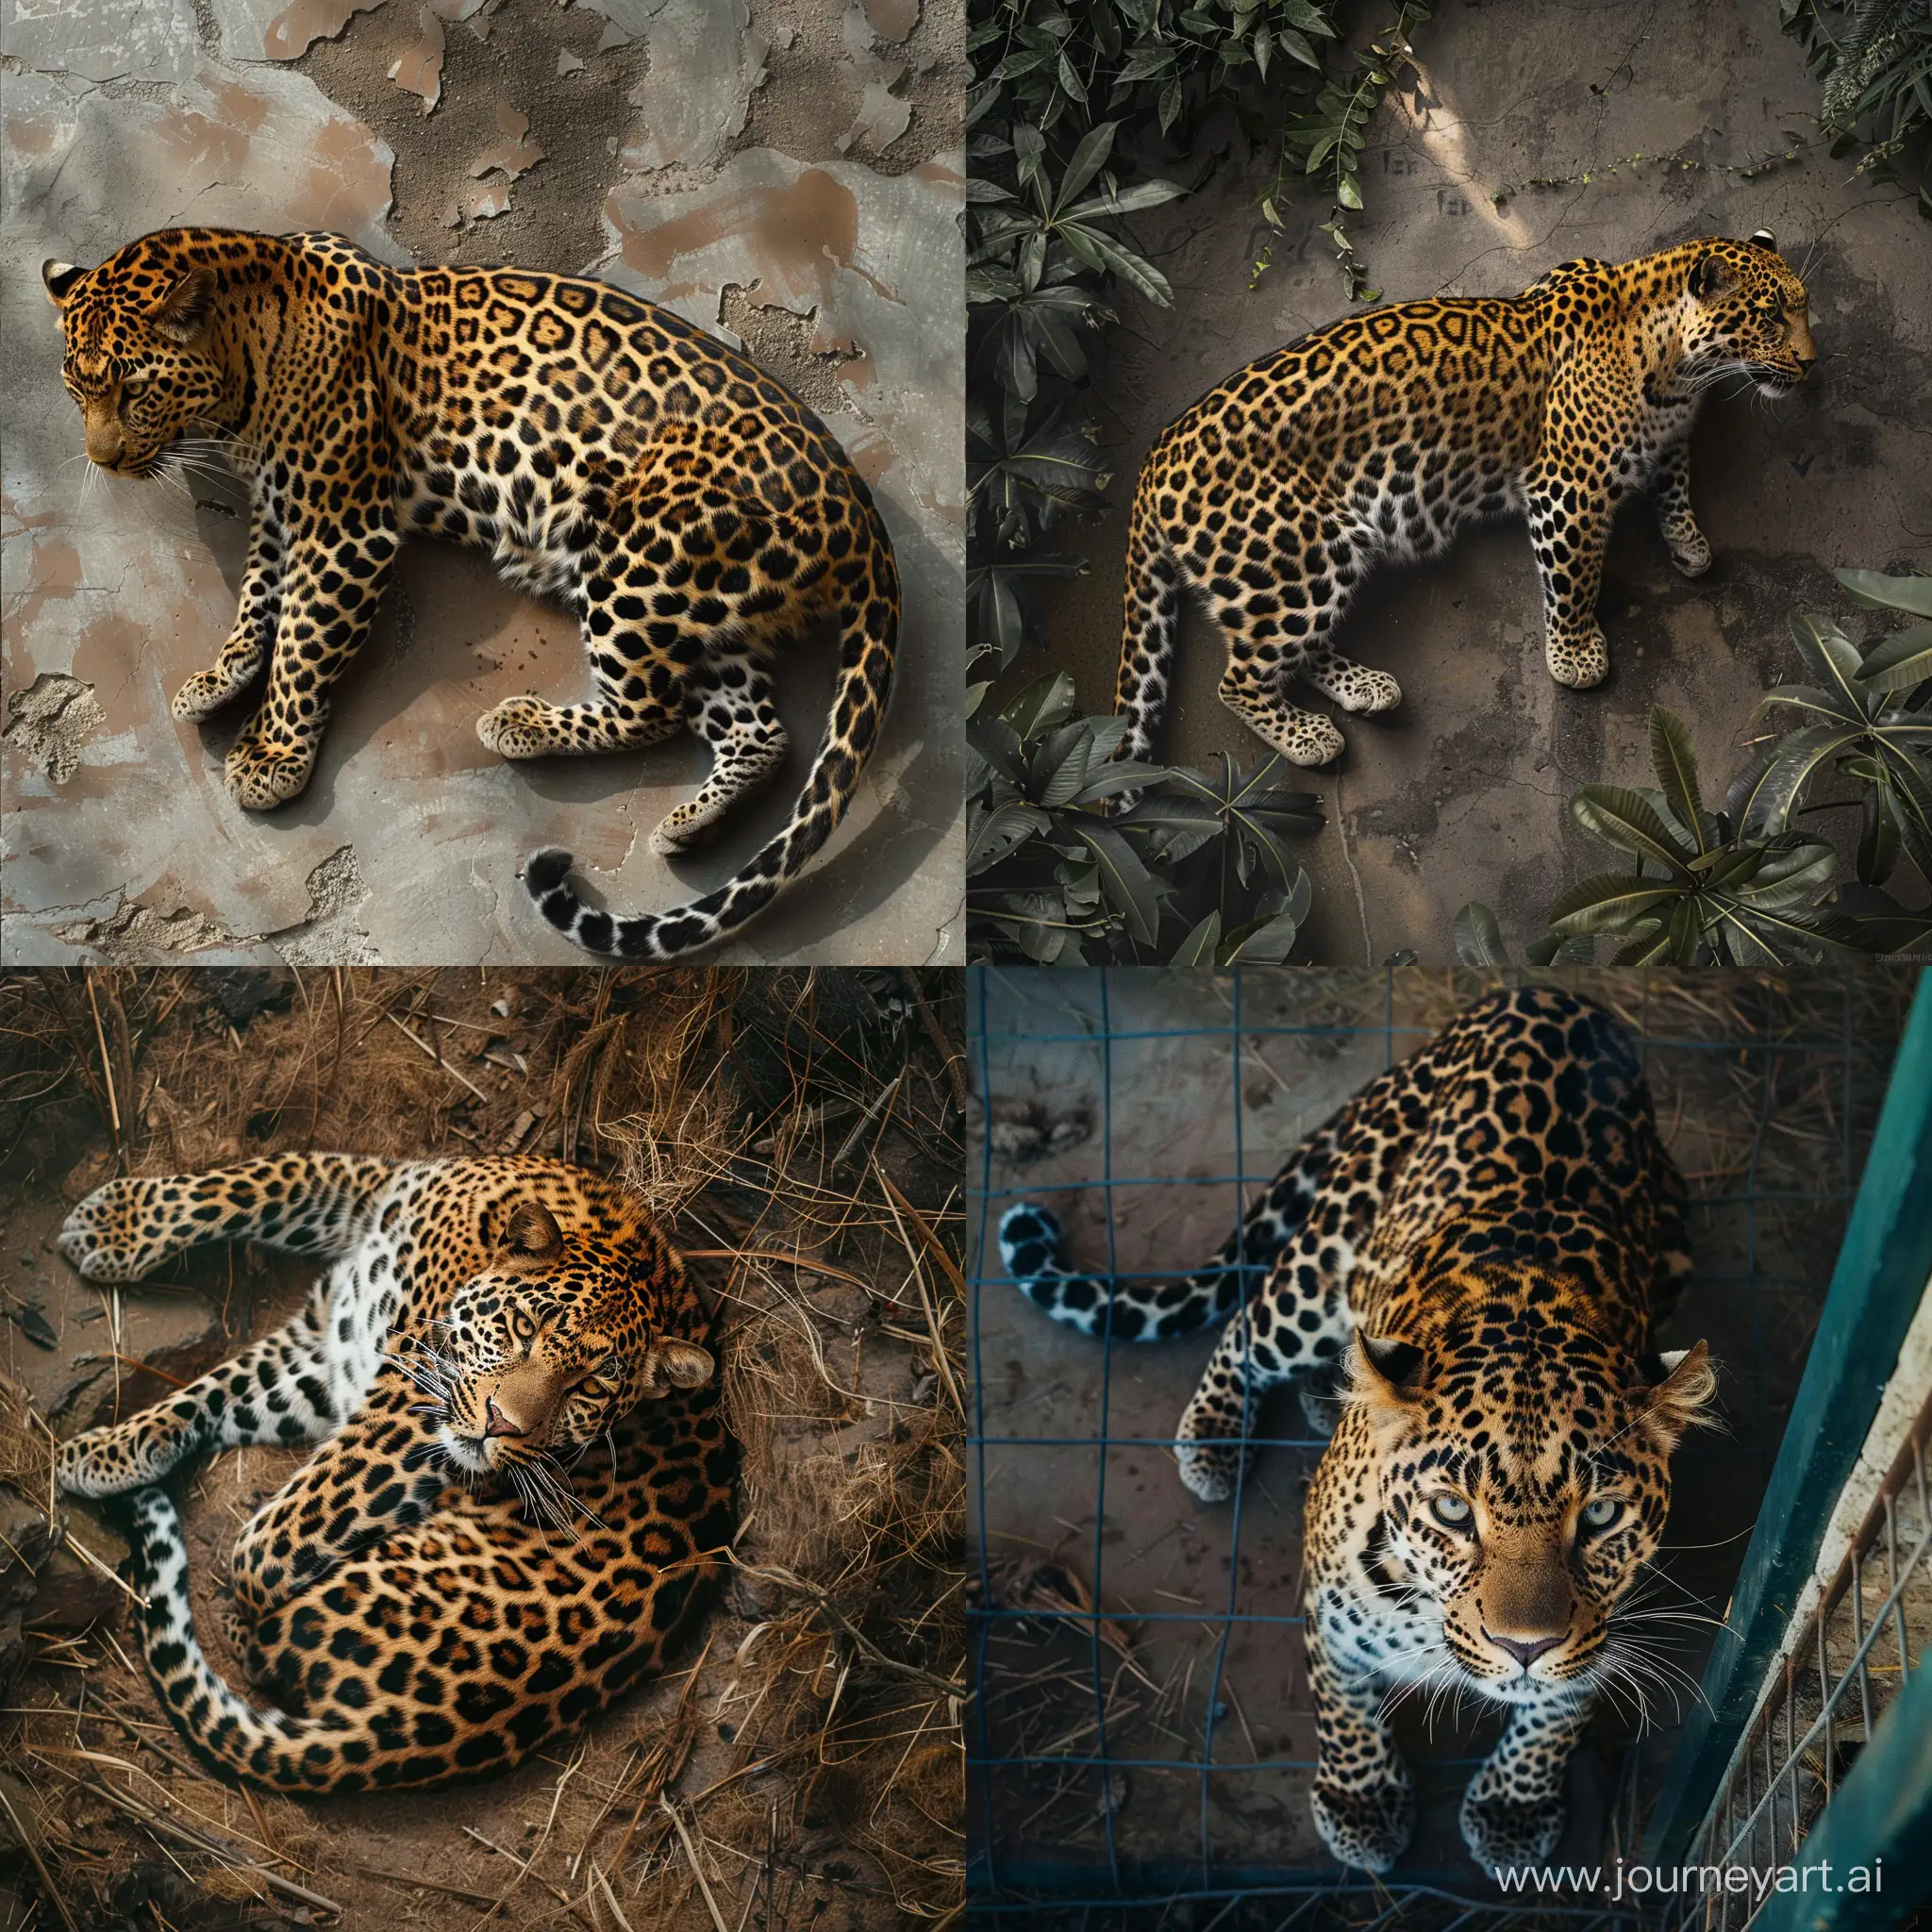 Detailed-Leopard-Habitat-Top-View-of-Zoo-Enclosure